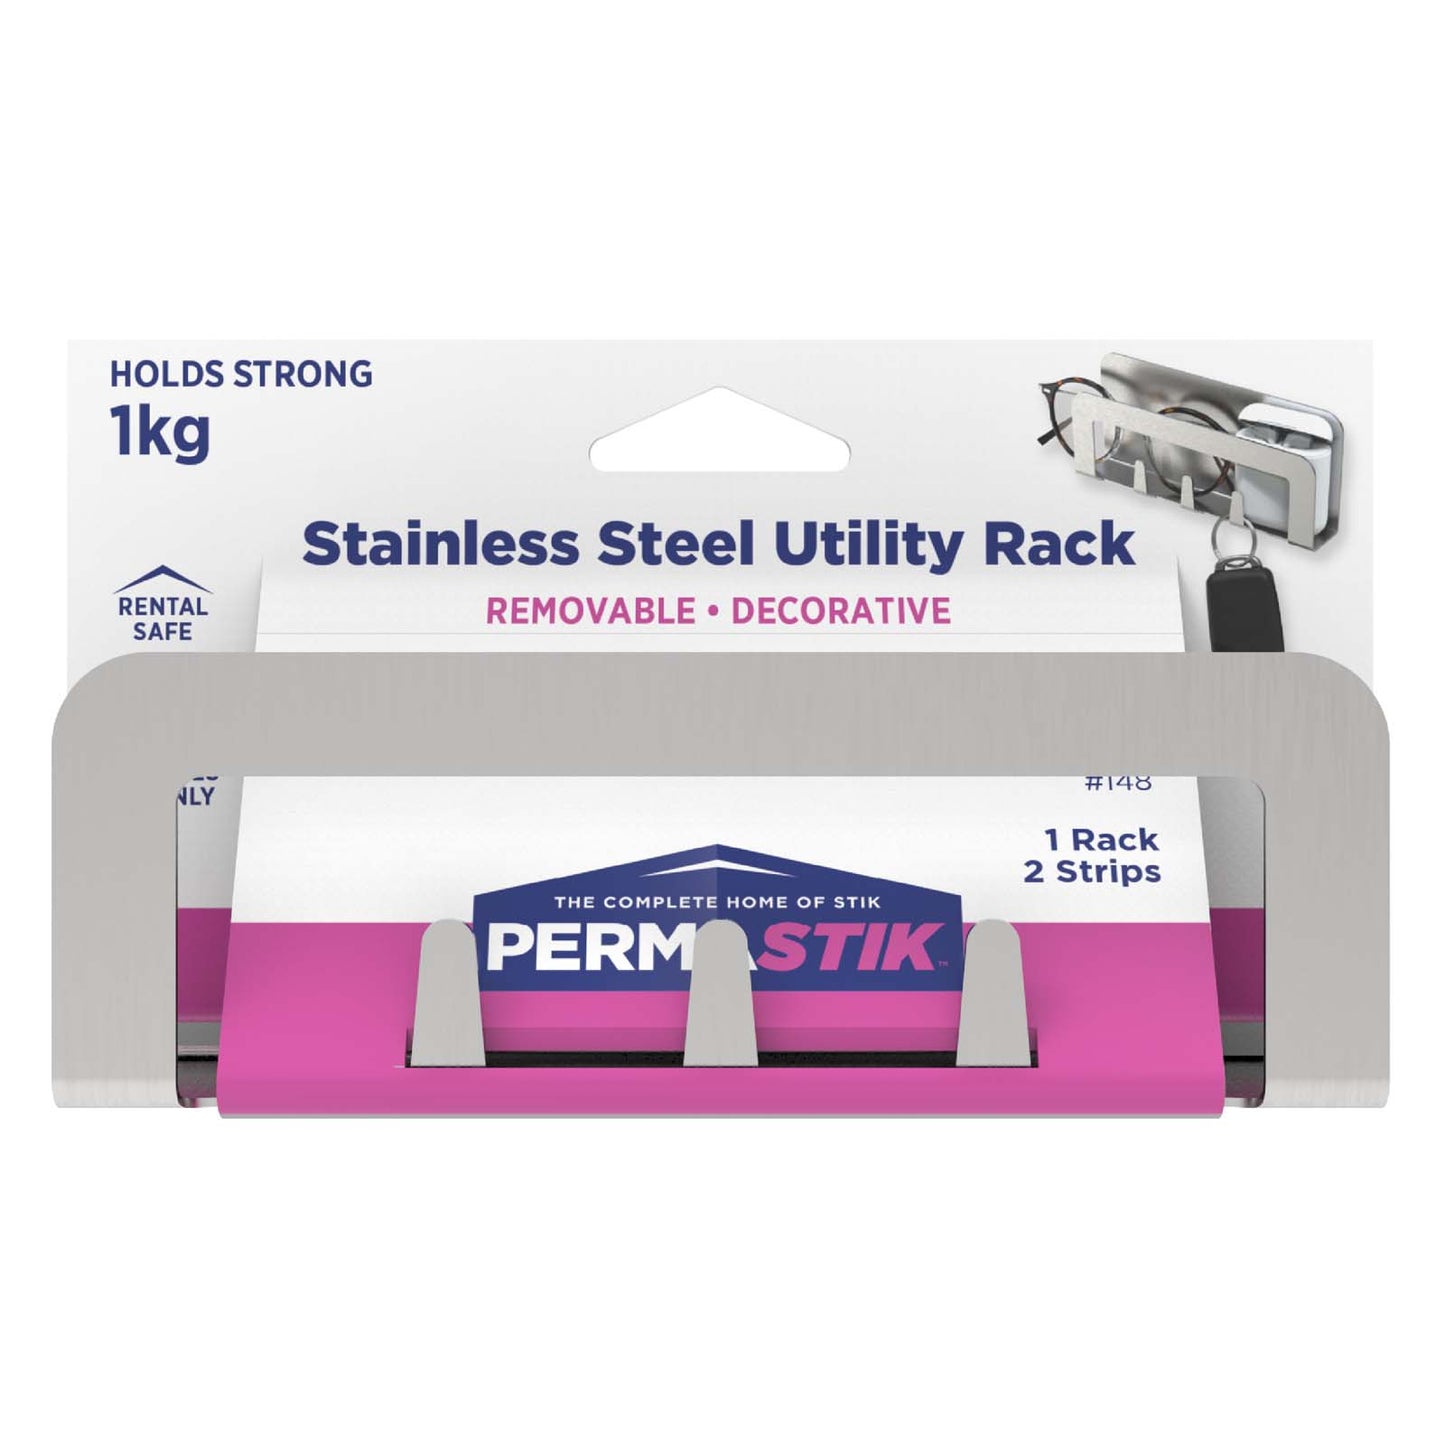 Stainless Steel Utility Rack